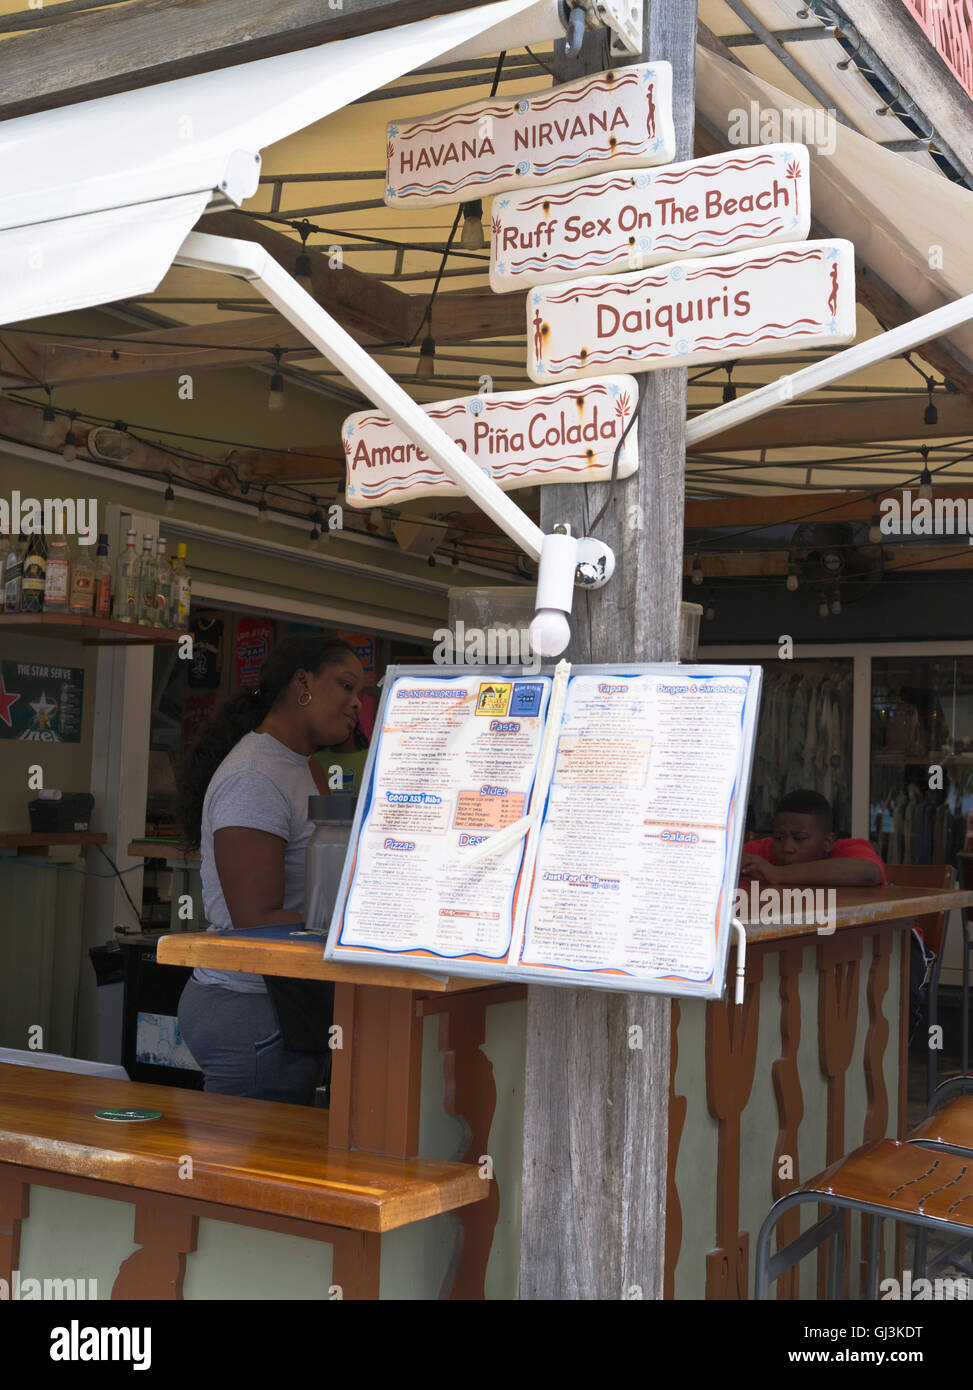 Dh Philipsburg ST MAARTEN CARIBBEAN West Indies bar menù di bevande Foto Stock